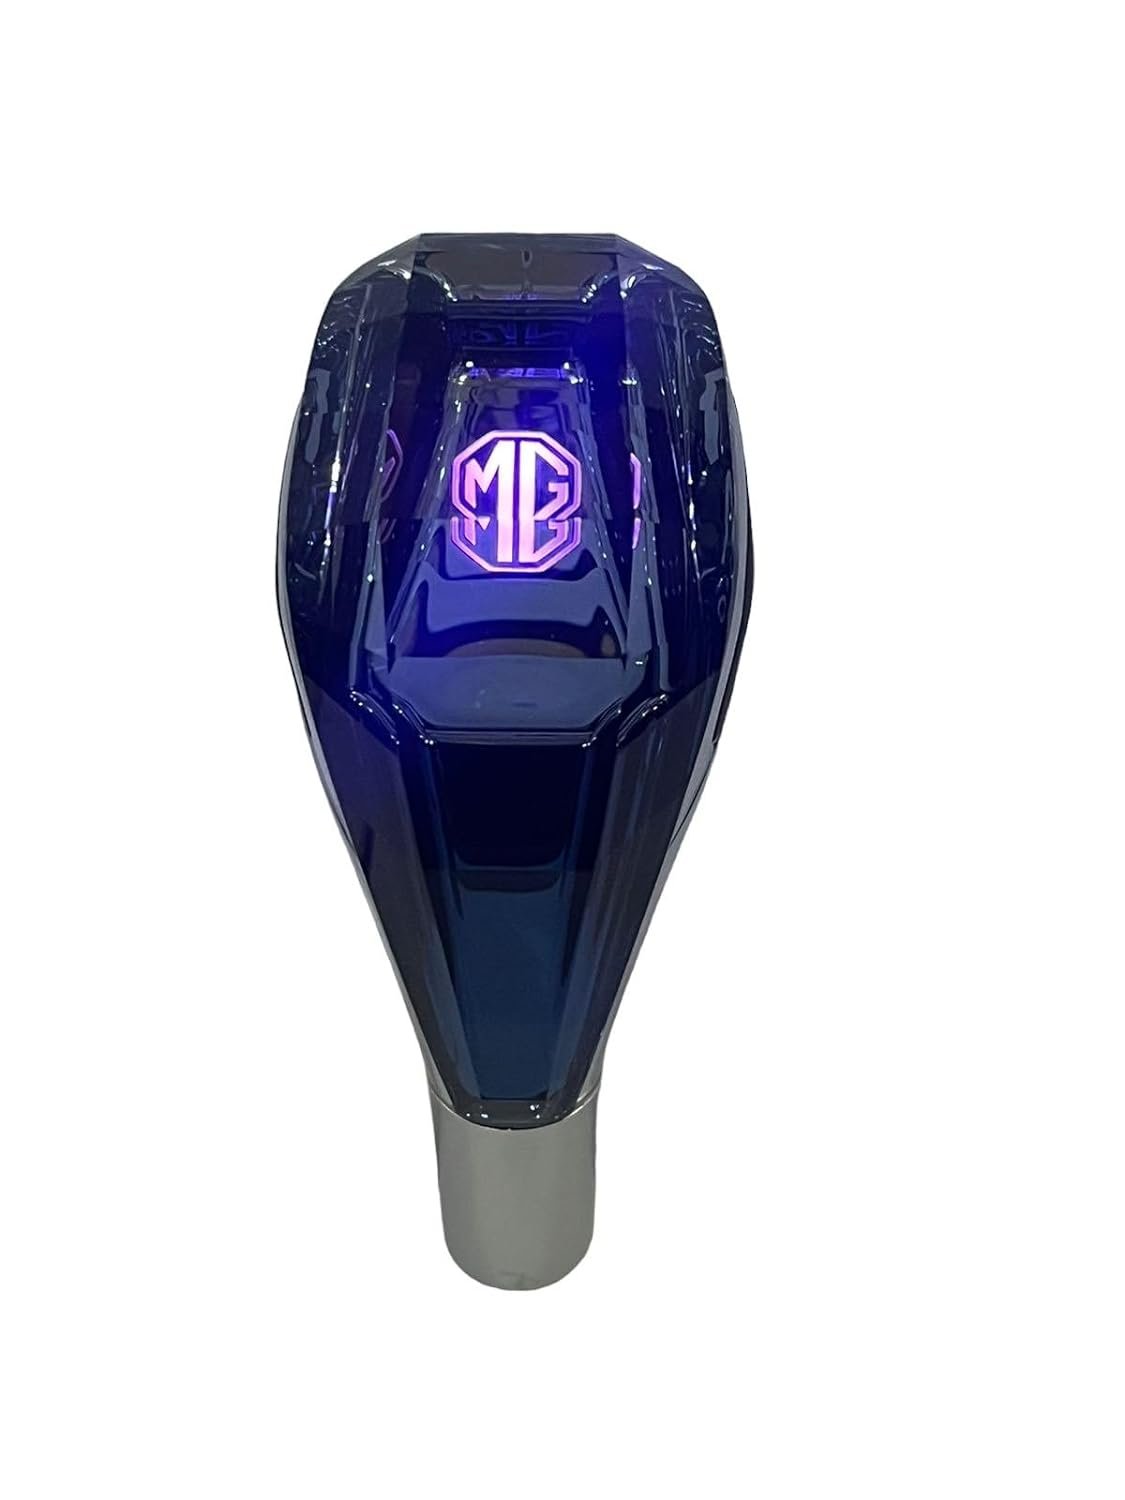 Crystal Shape Car LED Handball Crystal Shift Knob Shift Lever 7 Color Lights Illumination Touch Sensor Line Lighting Compatible with M-G Car Image 